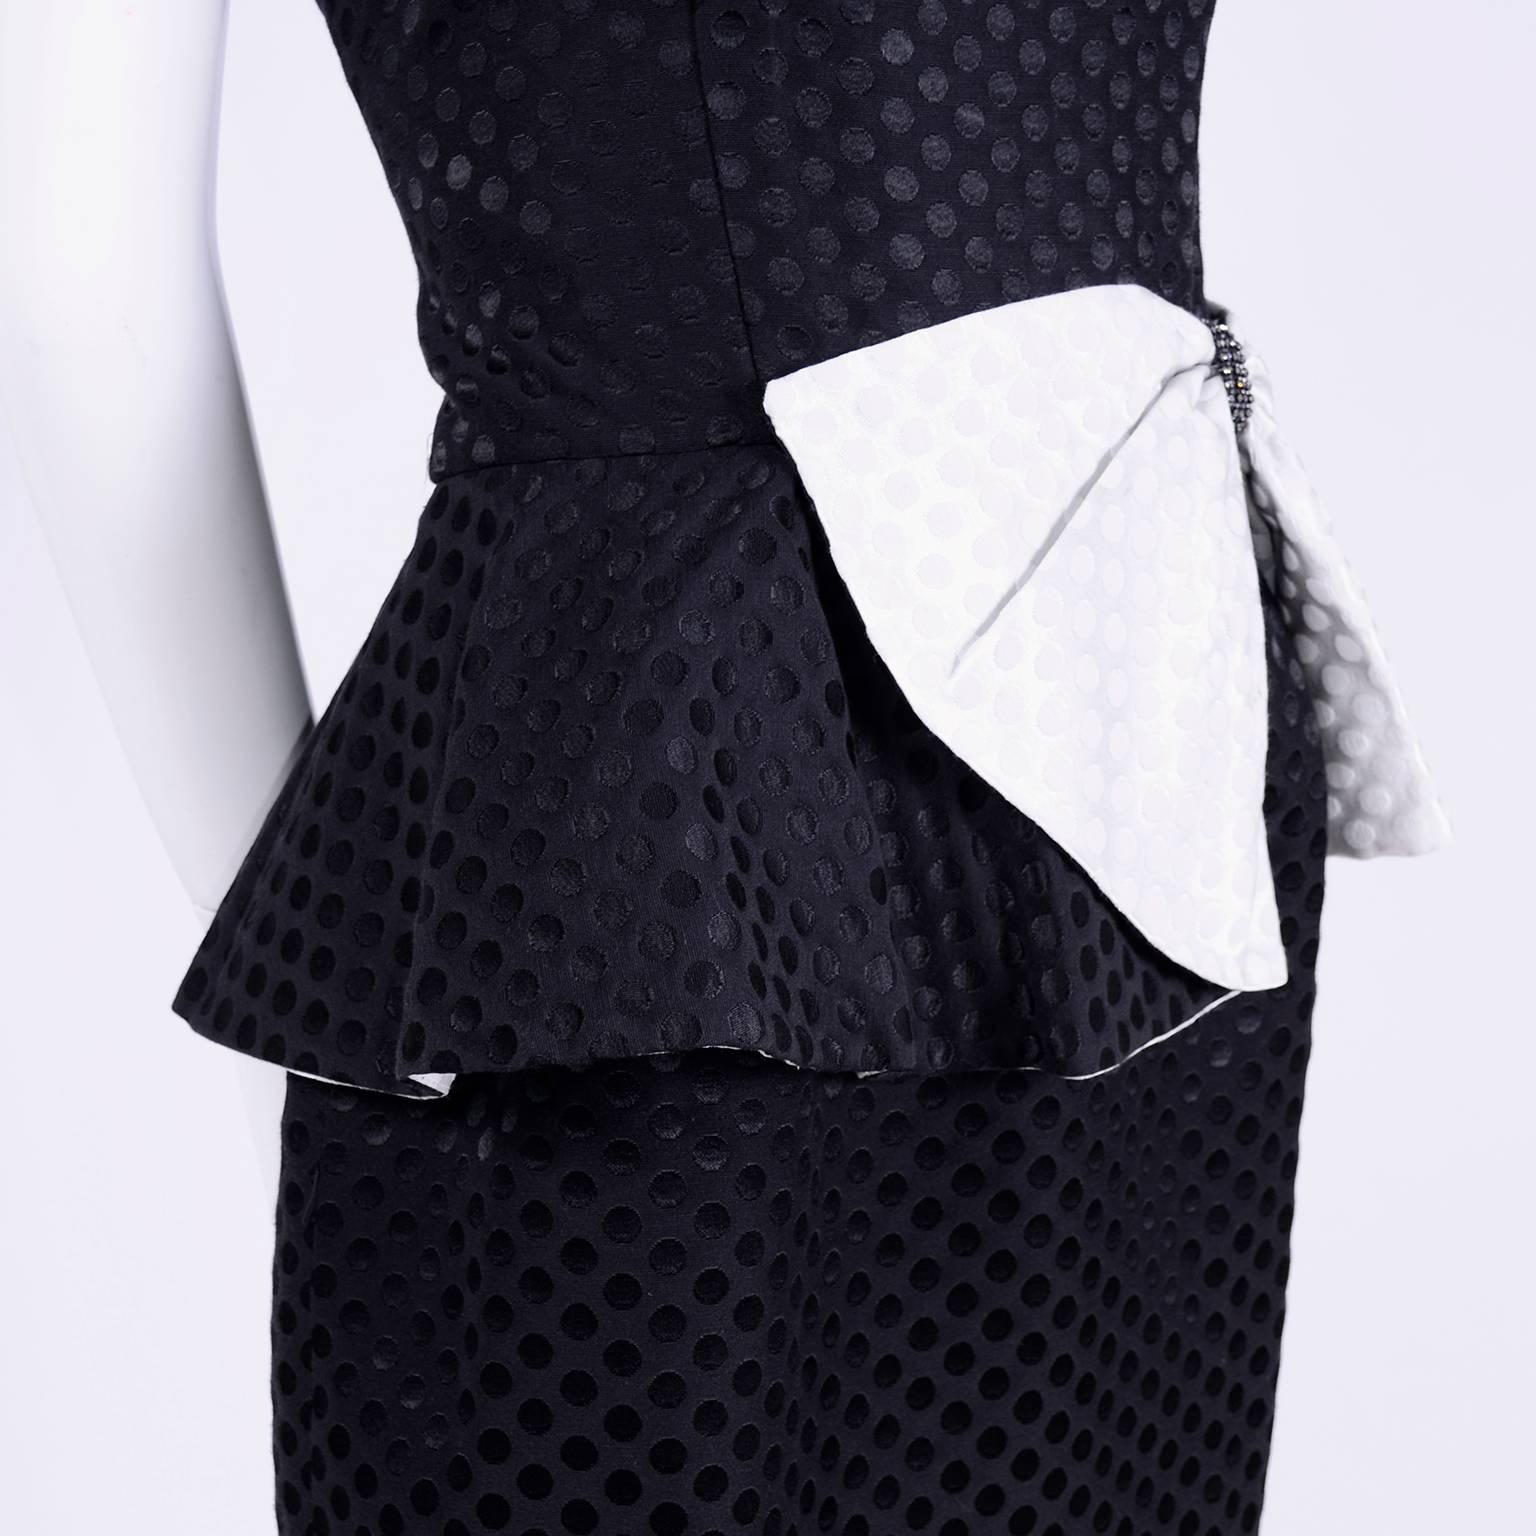 Women's Black / White Polka Dot Dress With Rhinestone Embellished Bow and Peplum, 1980s 